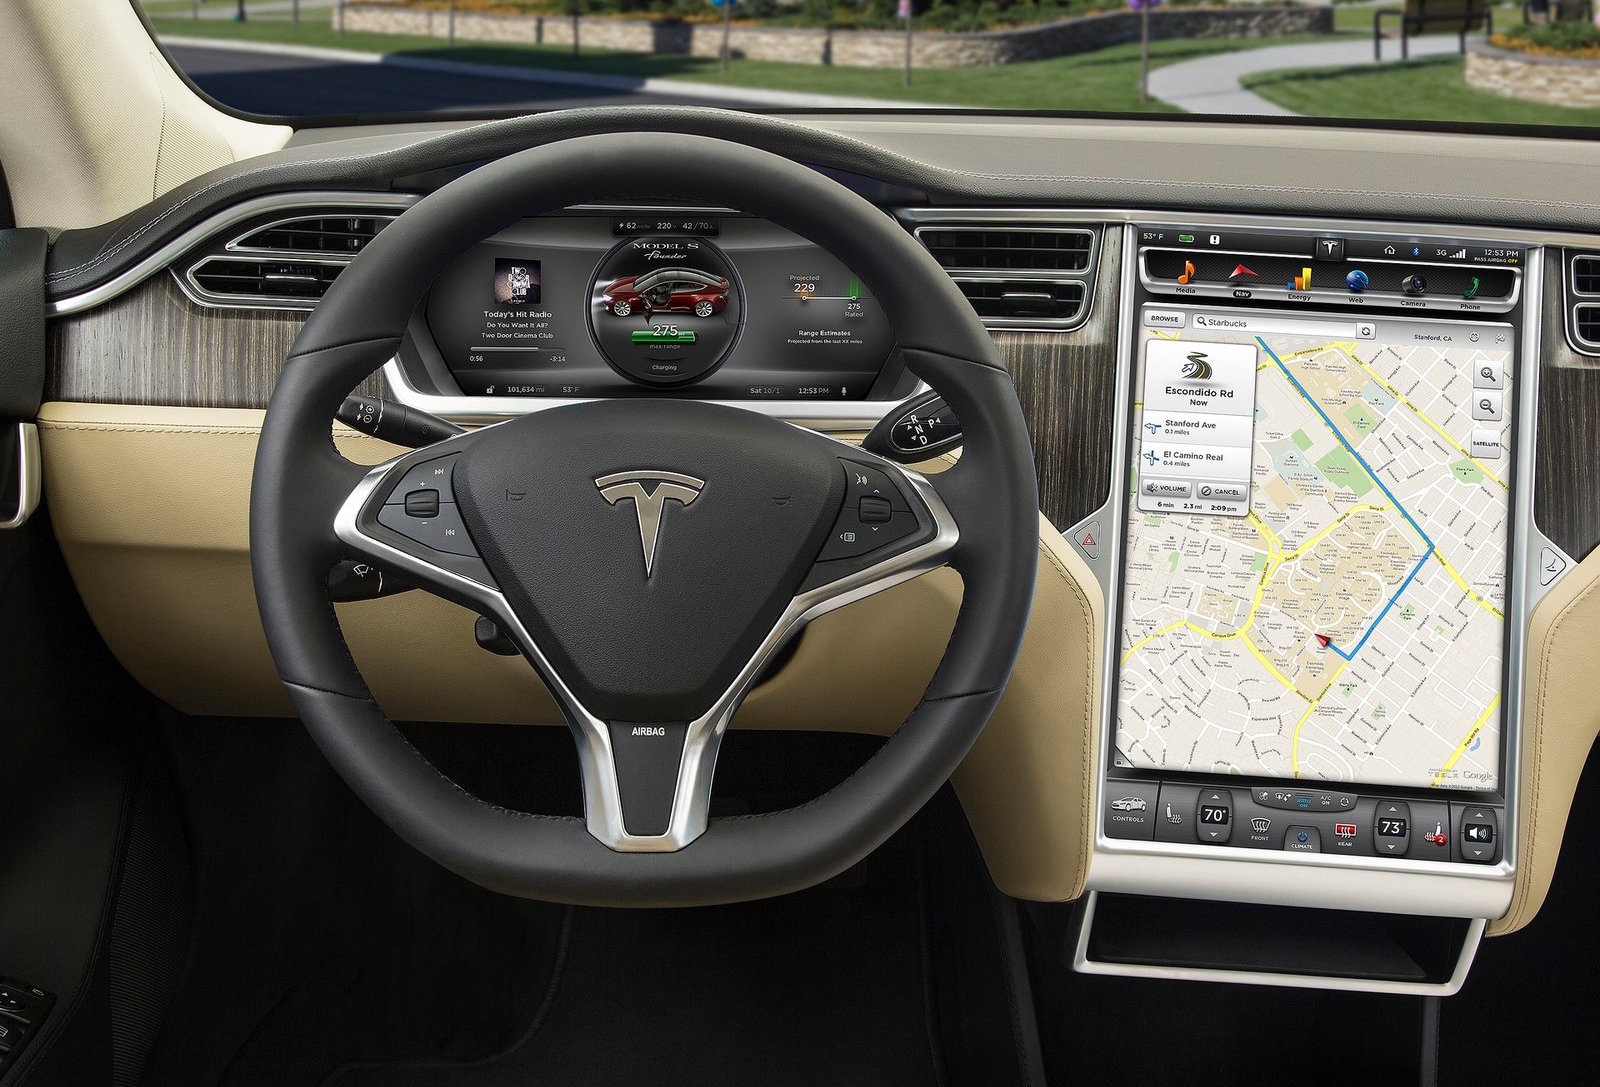 Tesla developing version 8.0 software, Autopilot gets new off-ramp function